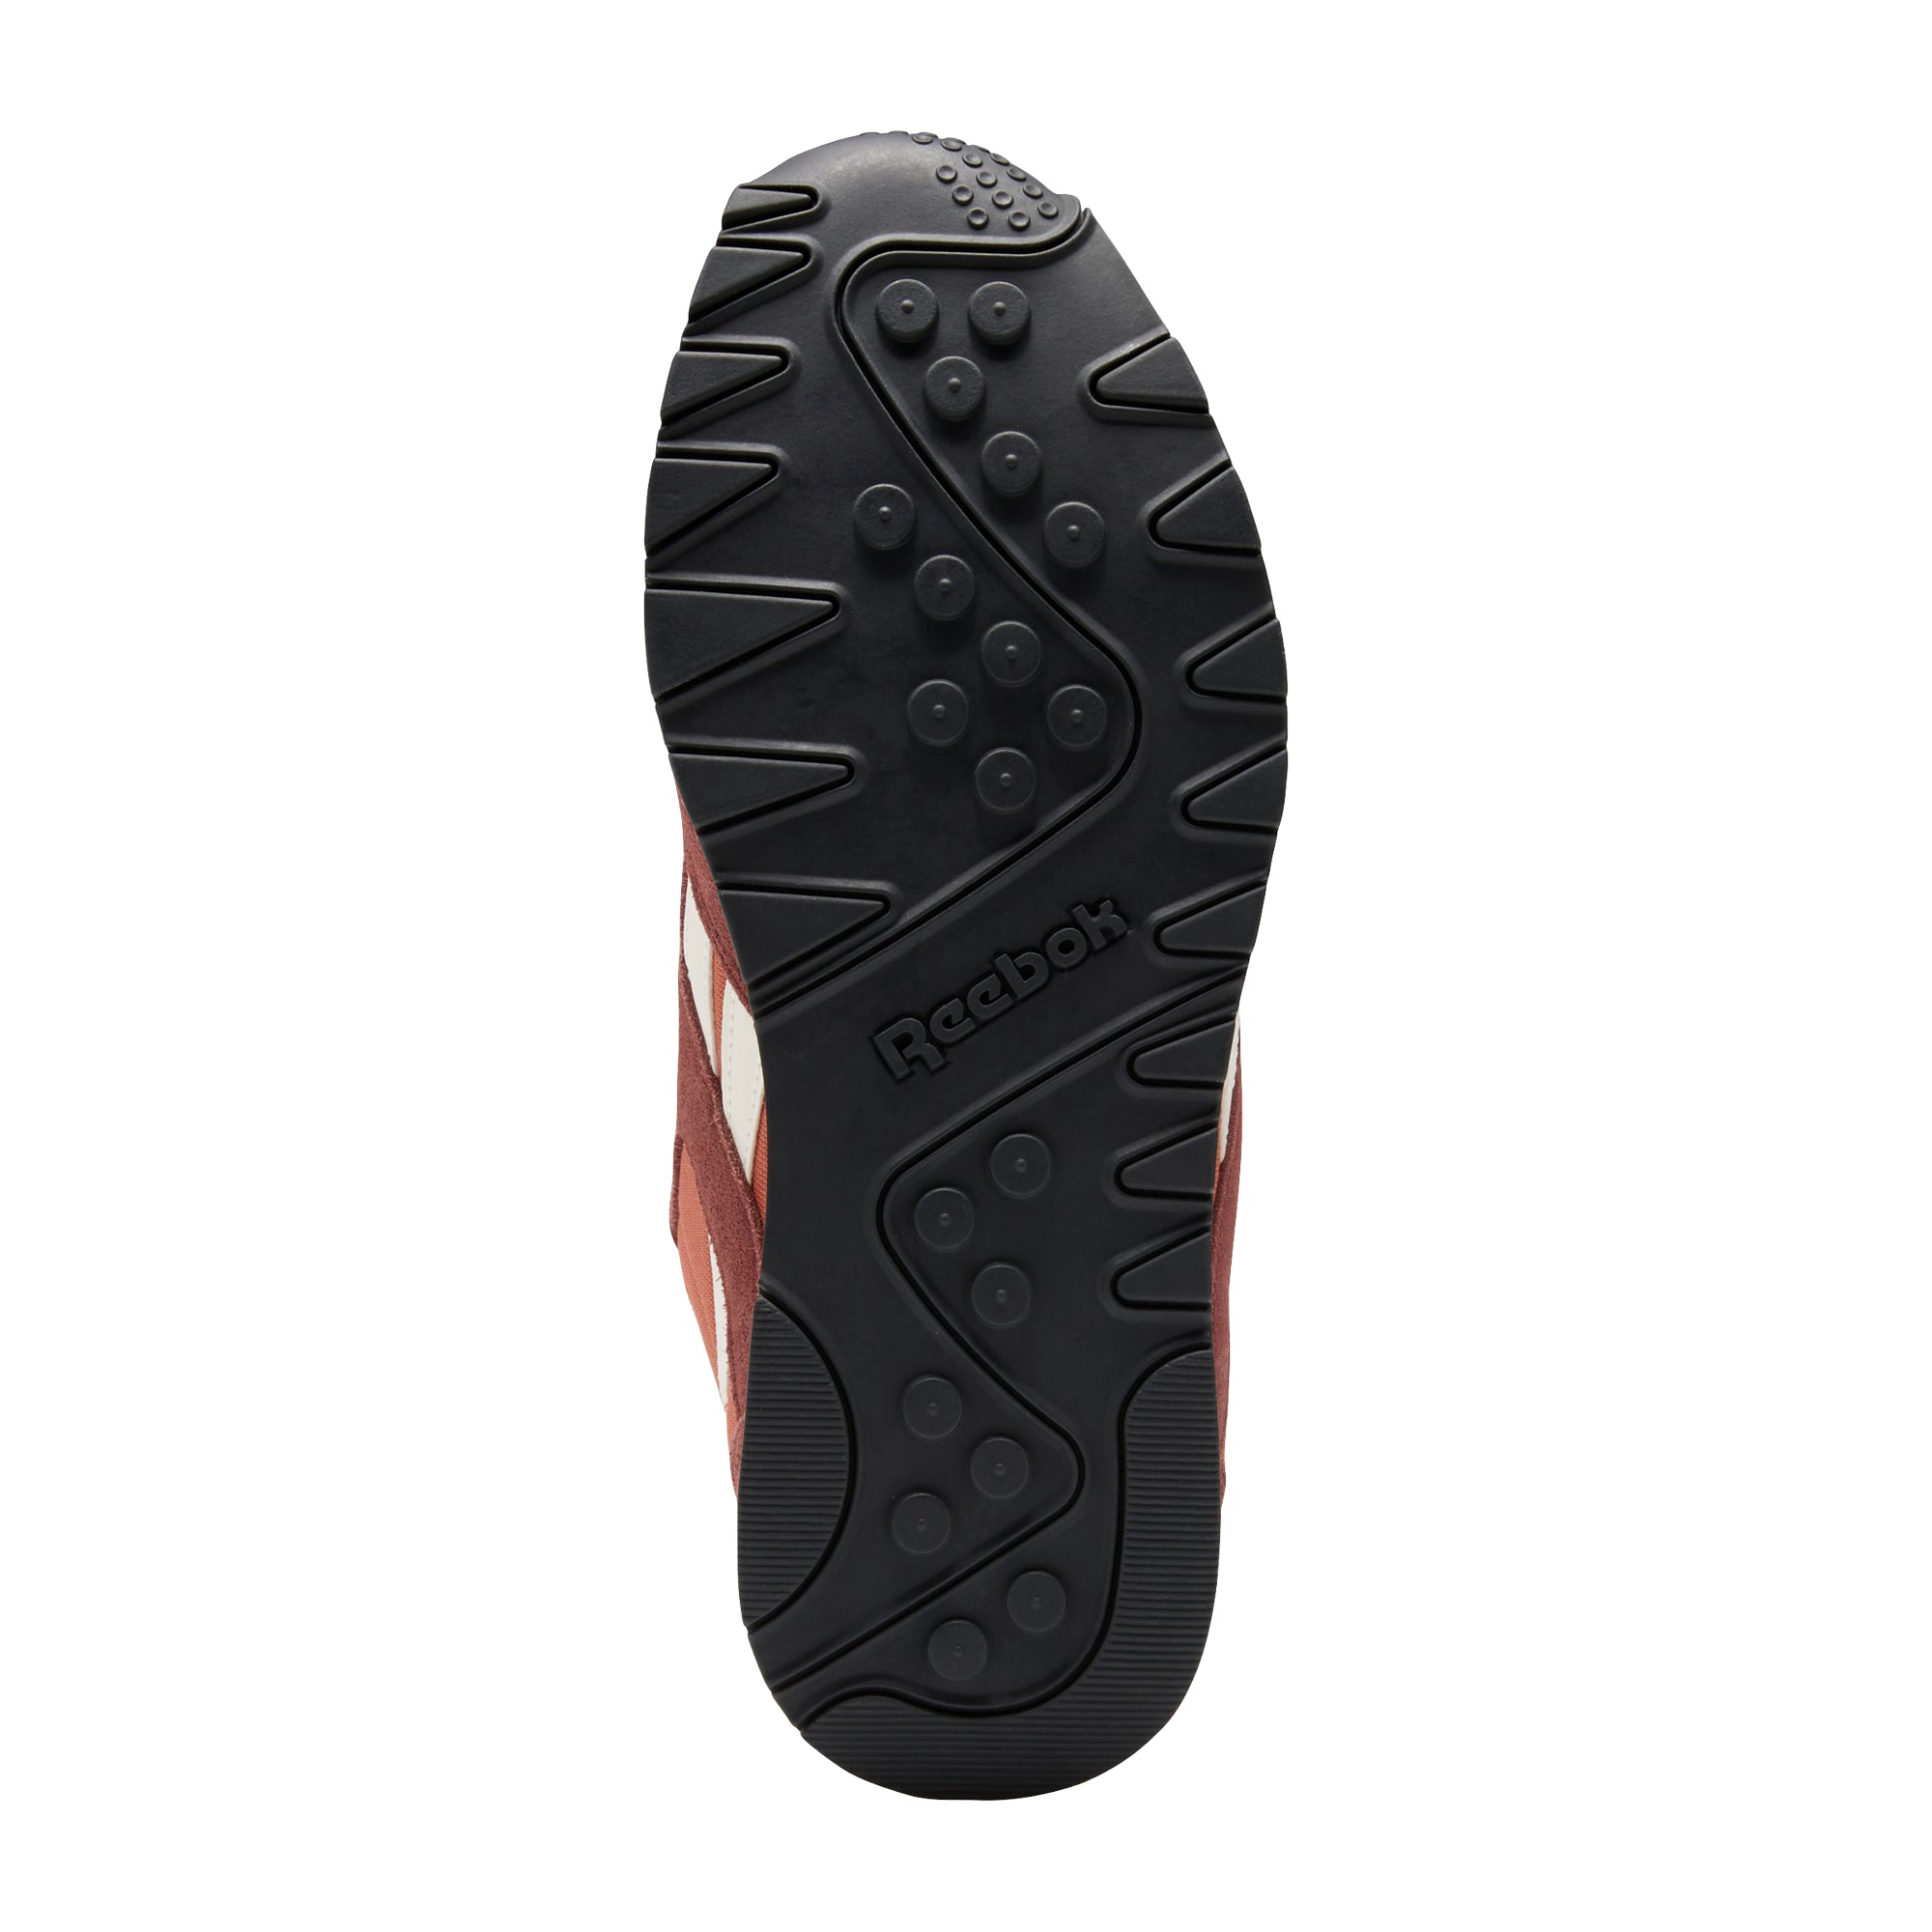 Reebok Tennis Shoes - FY 7523